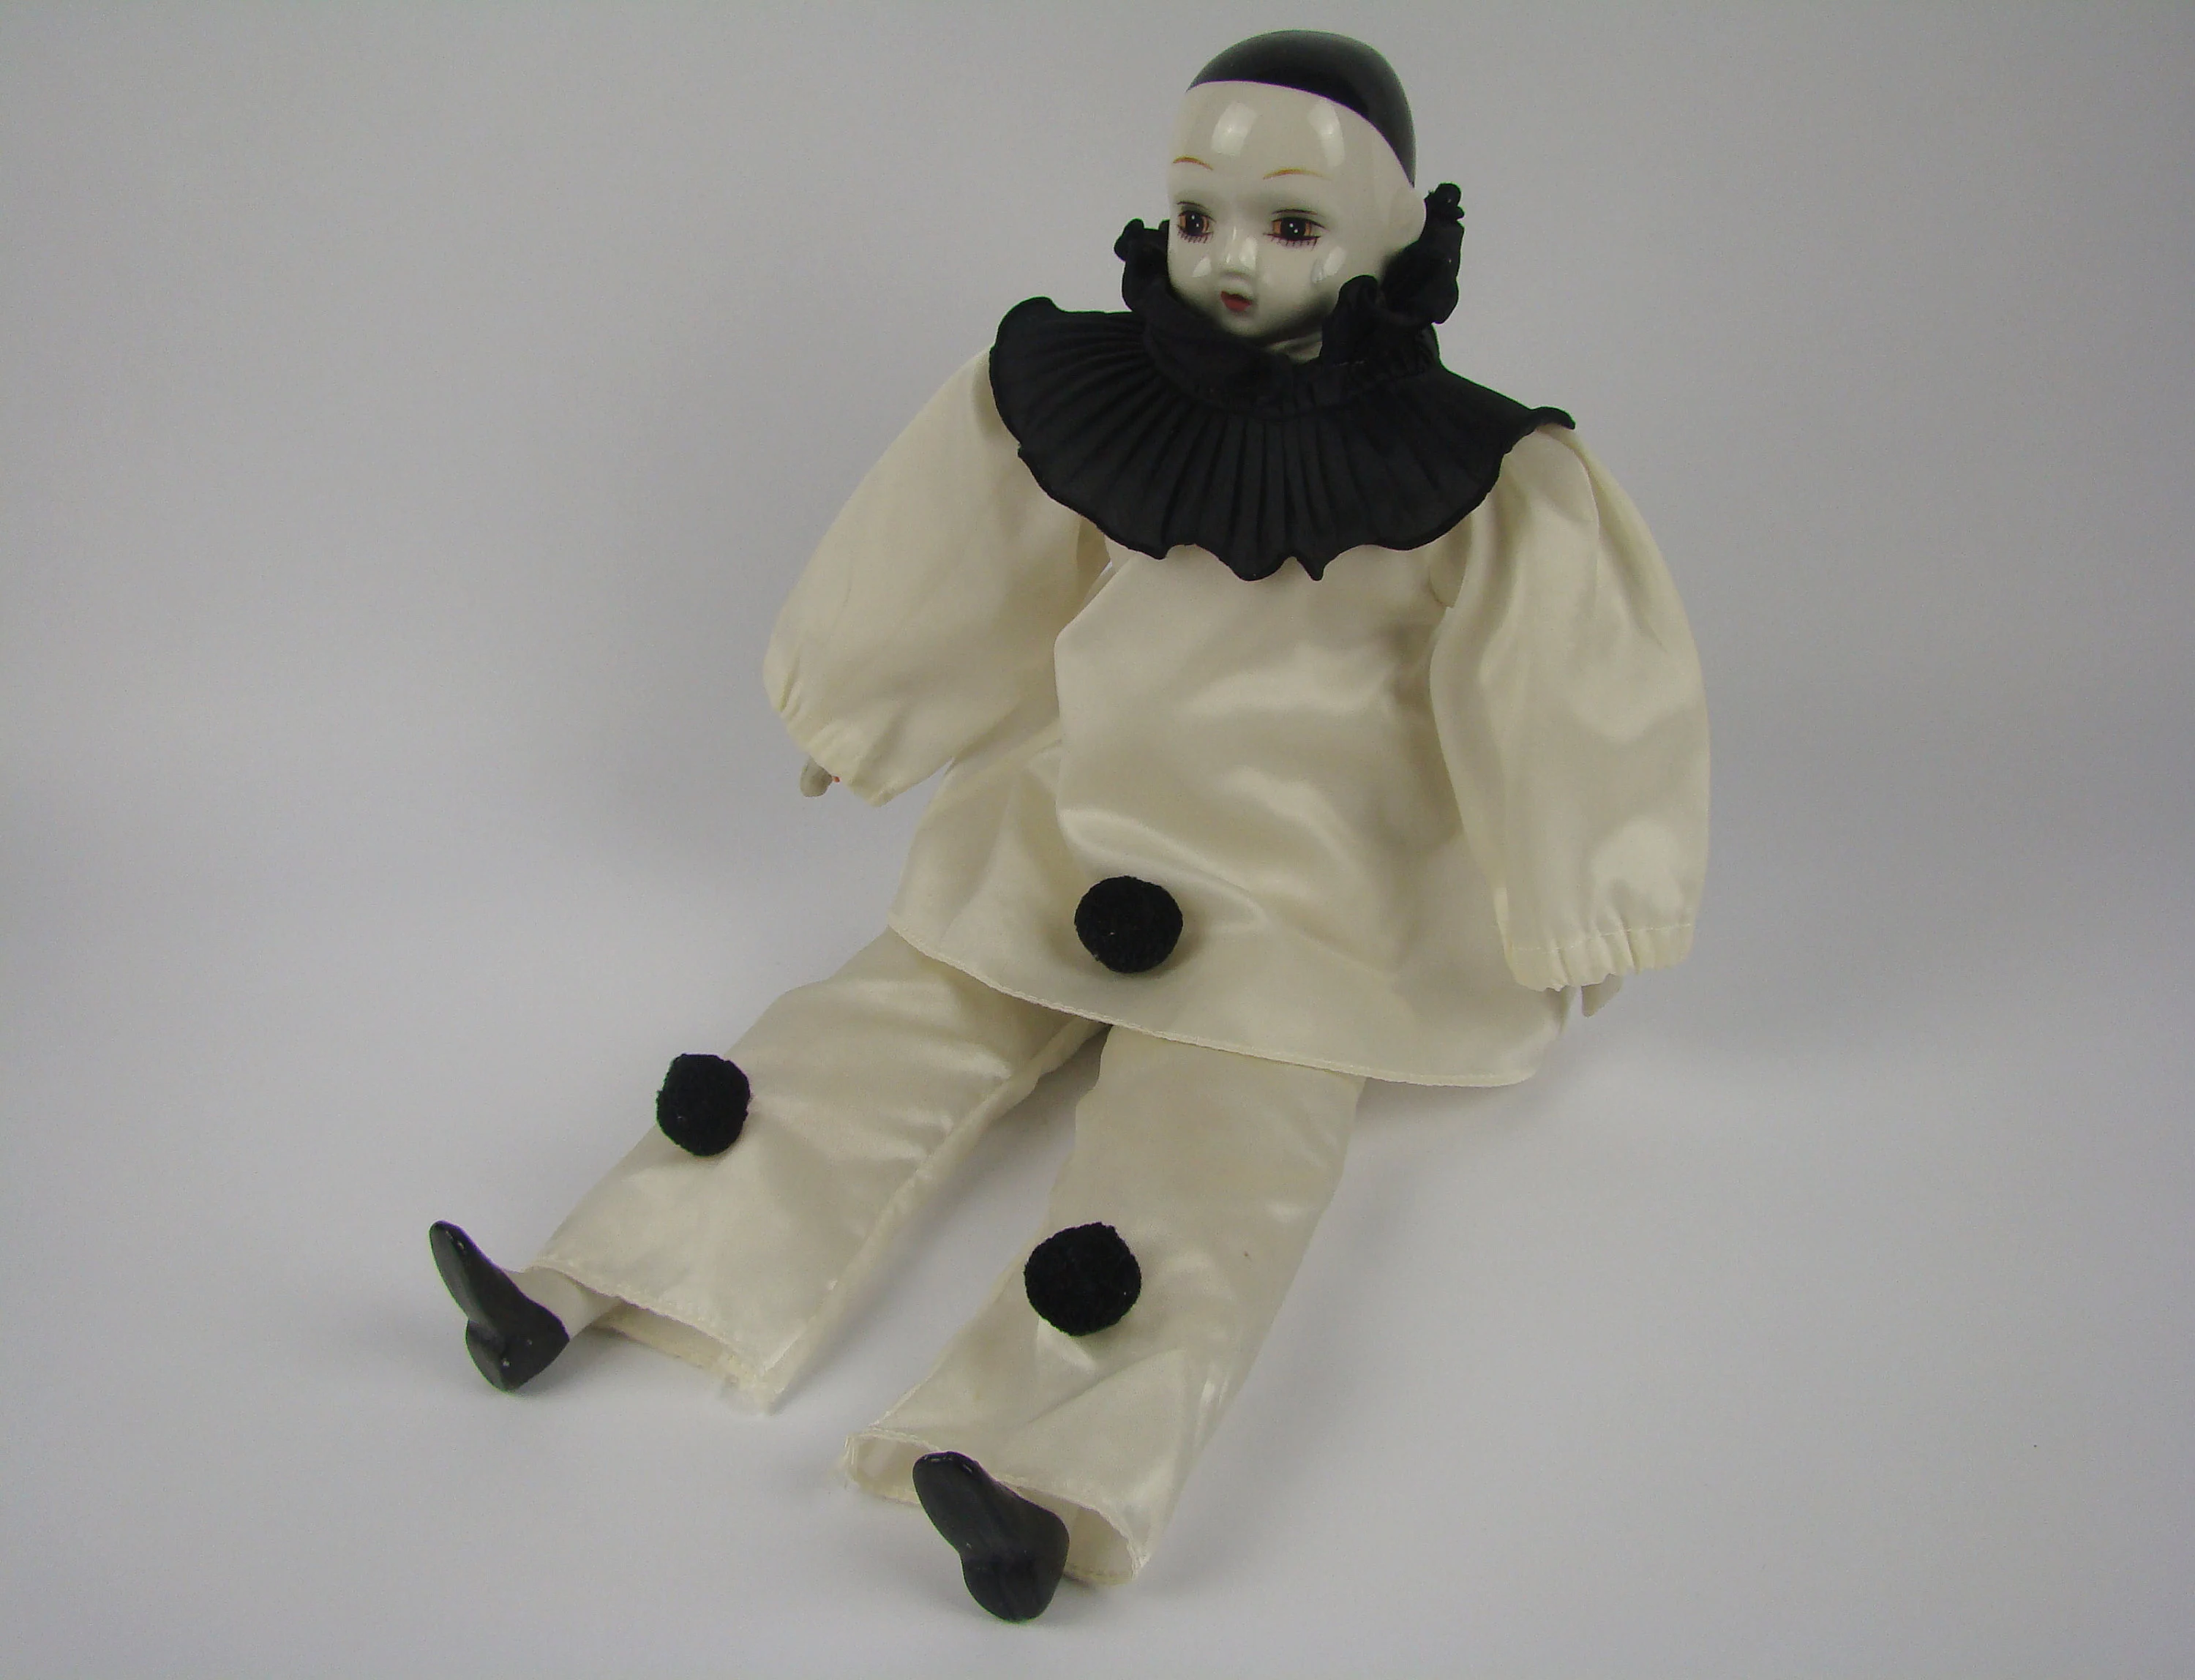 a photo of a pierrot clown doll